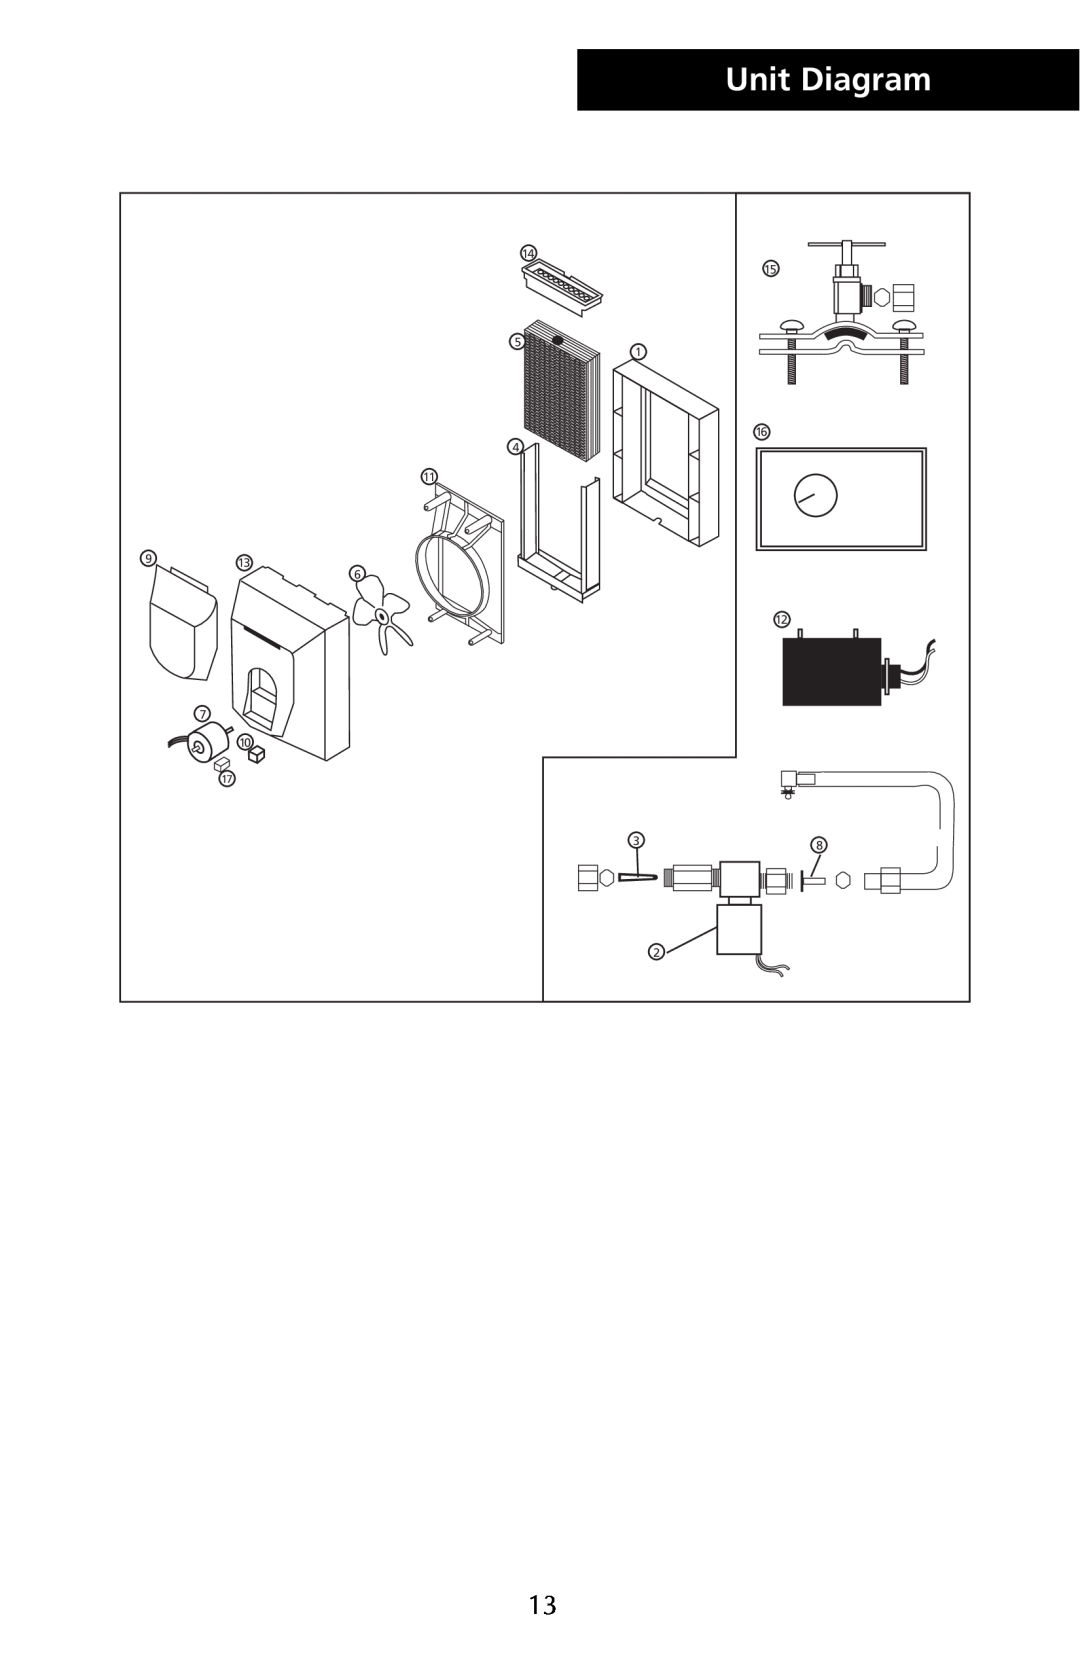 Herrmidifier Co G-100ES manual Unit Diagram 